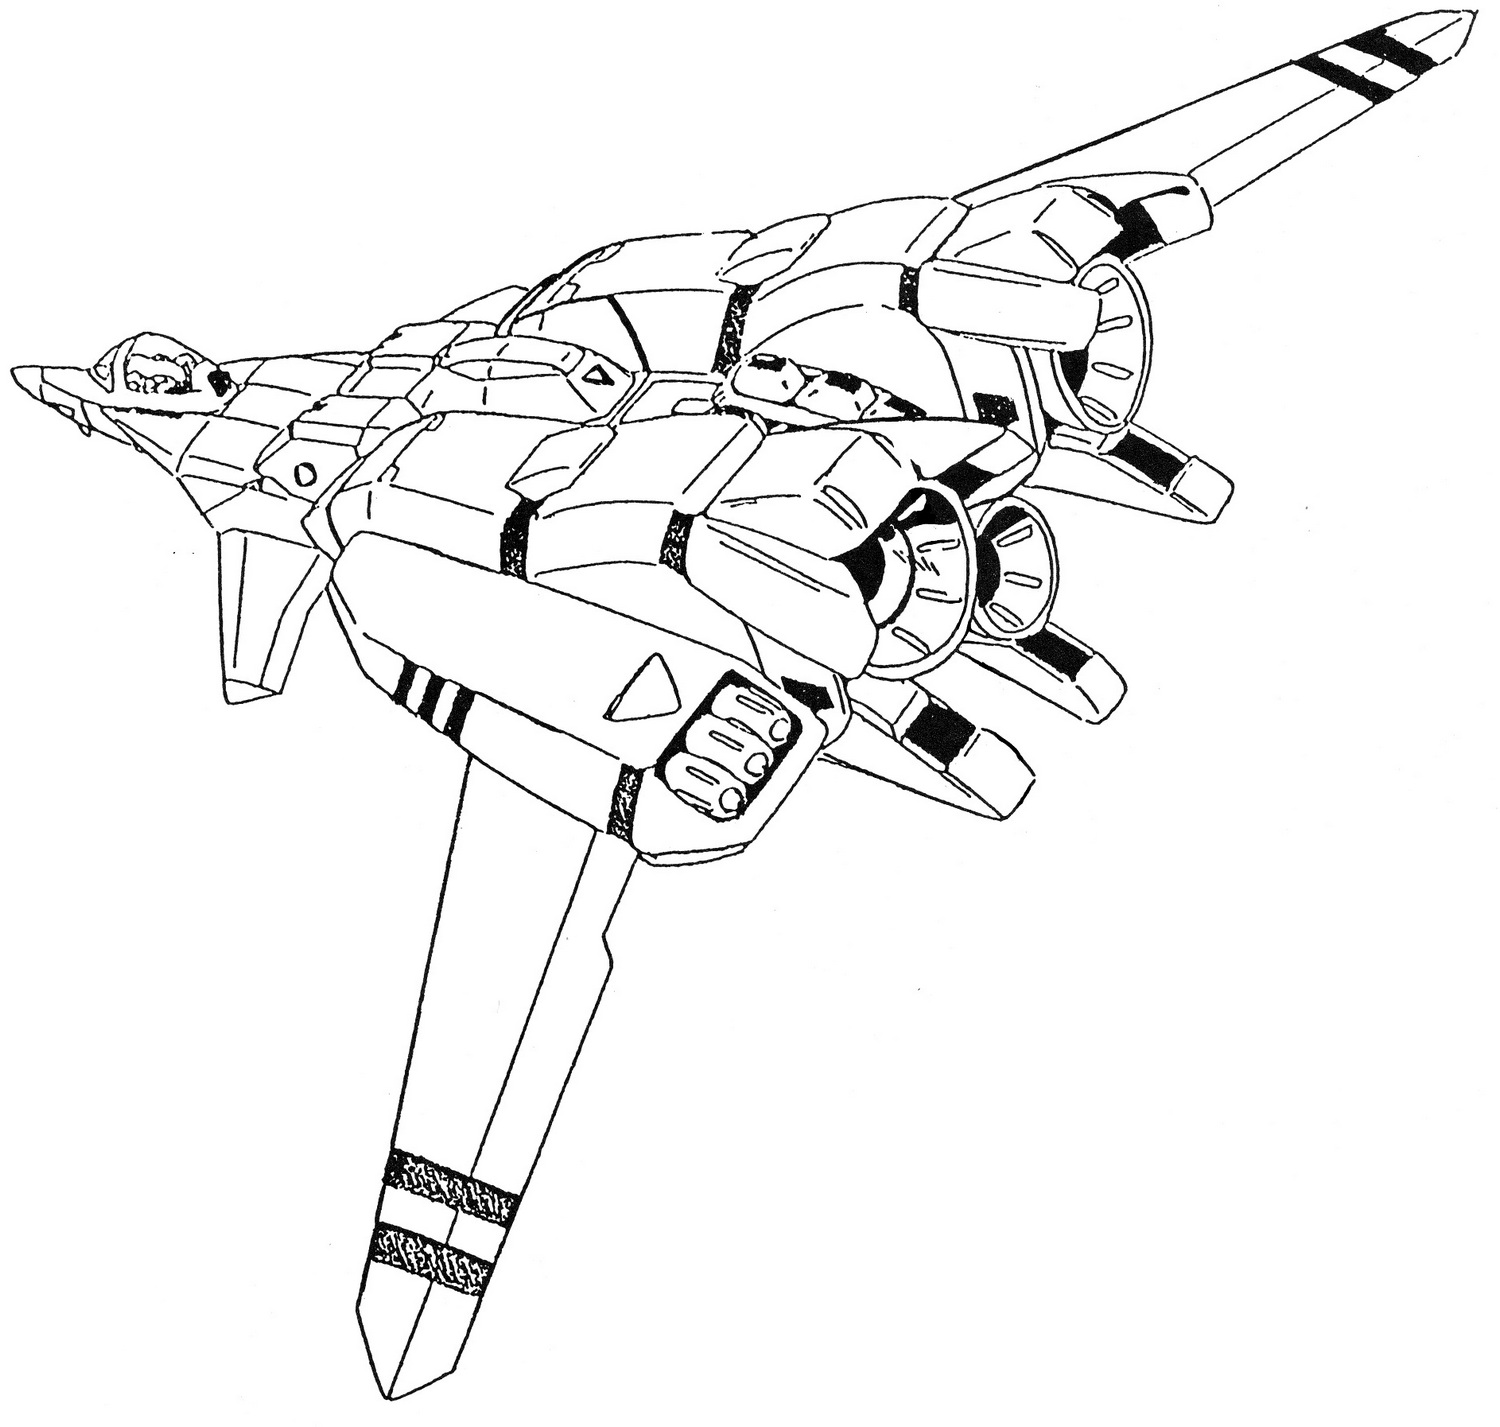 ab-01-bomber-docked-rear